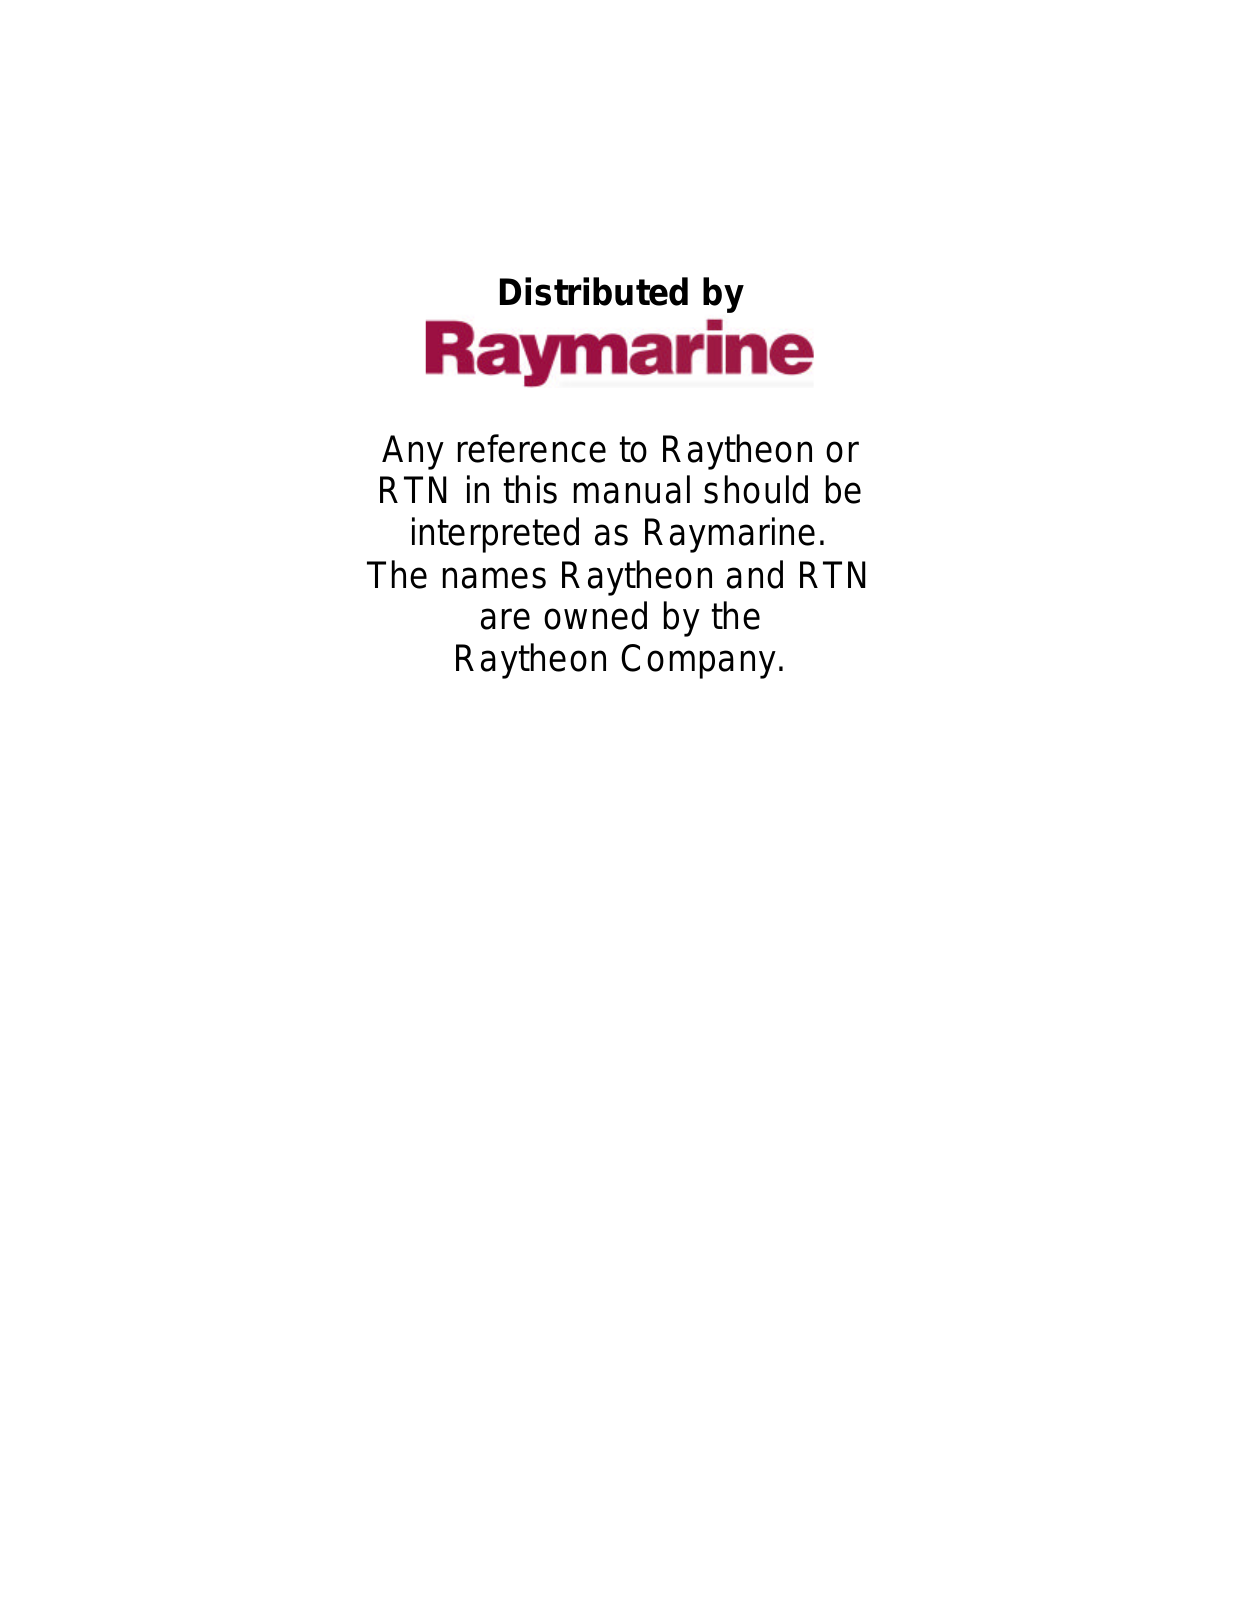 Raymarine APELCO DXL-6510 Manual